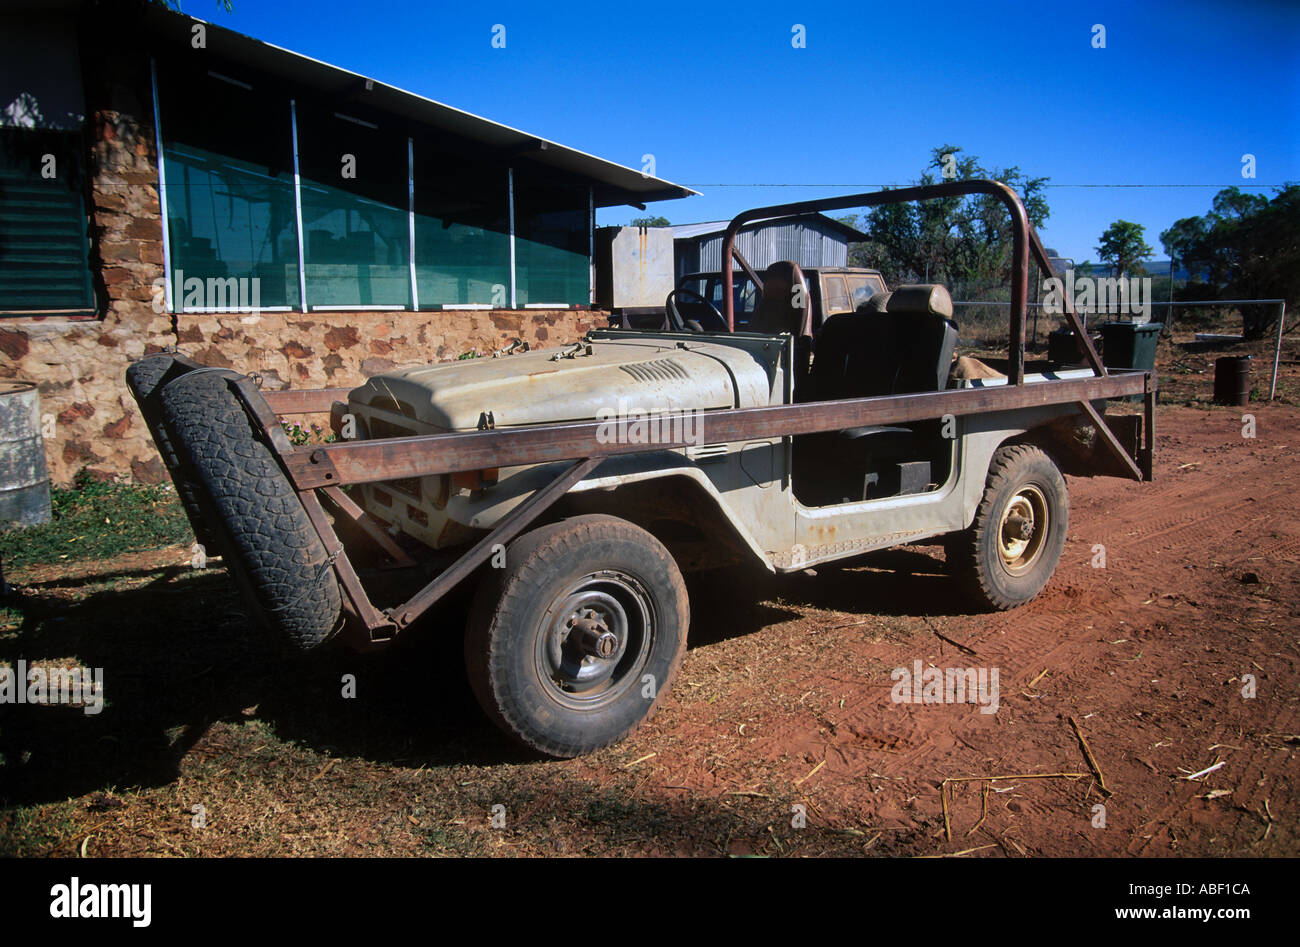 10 96 West Australien Australien The Kimberley A Bull Catcher A individuell vier Fahrzeug entwickelt, um Vieh Throu jagen Stockfoto